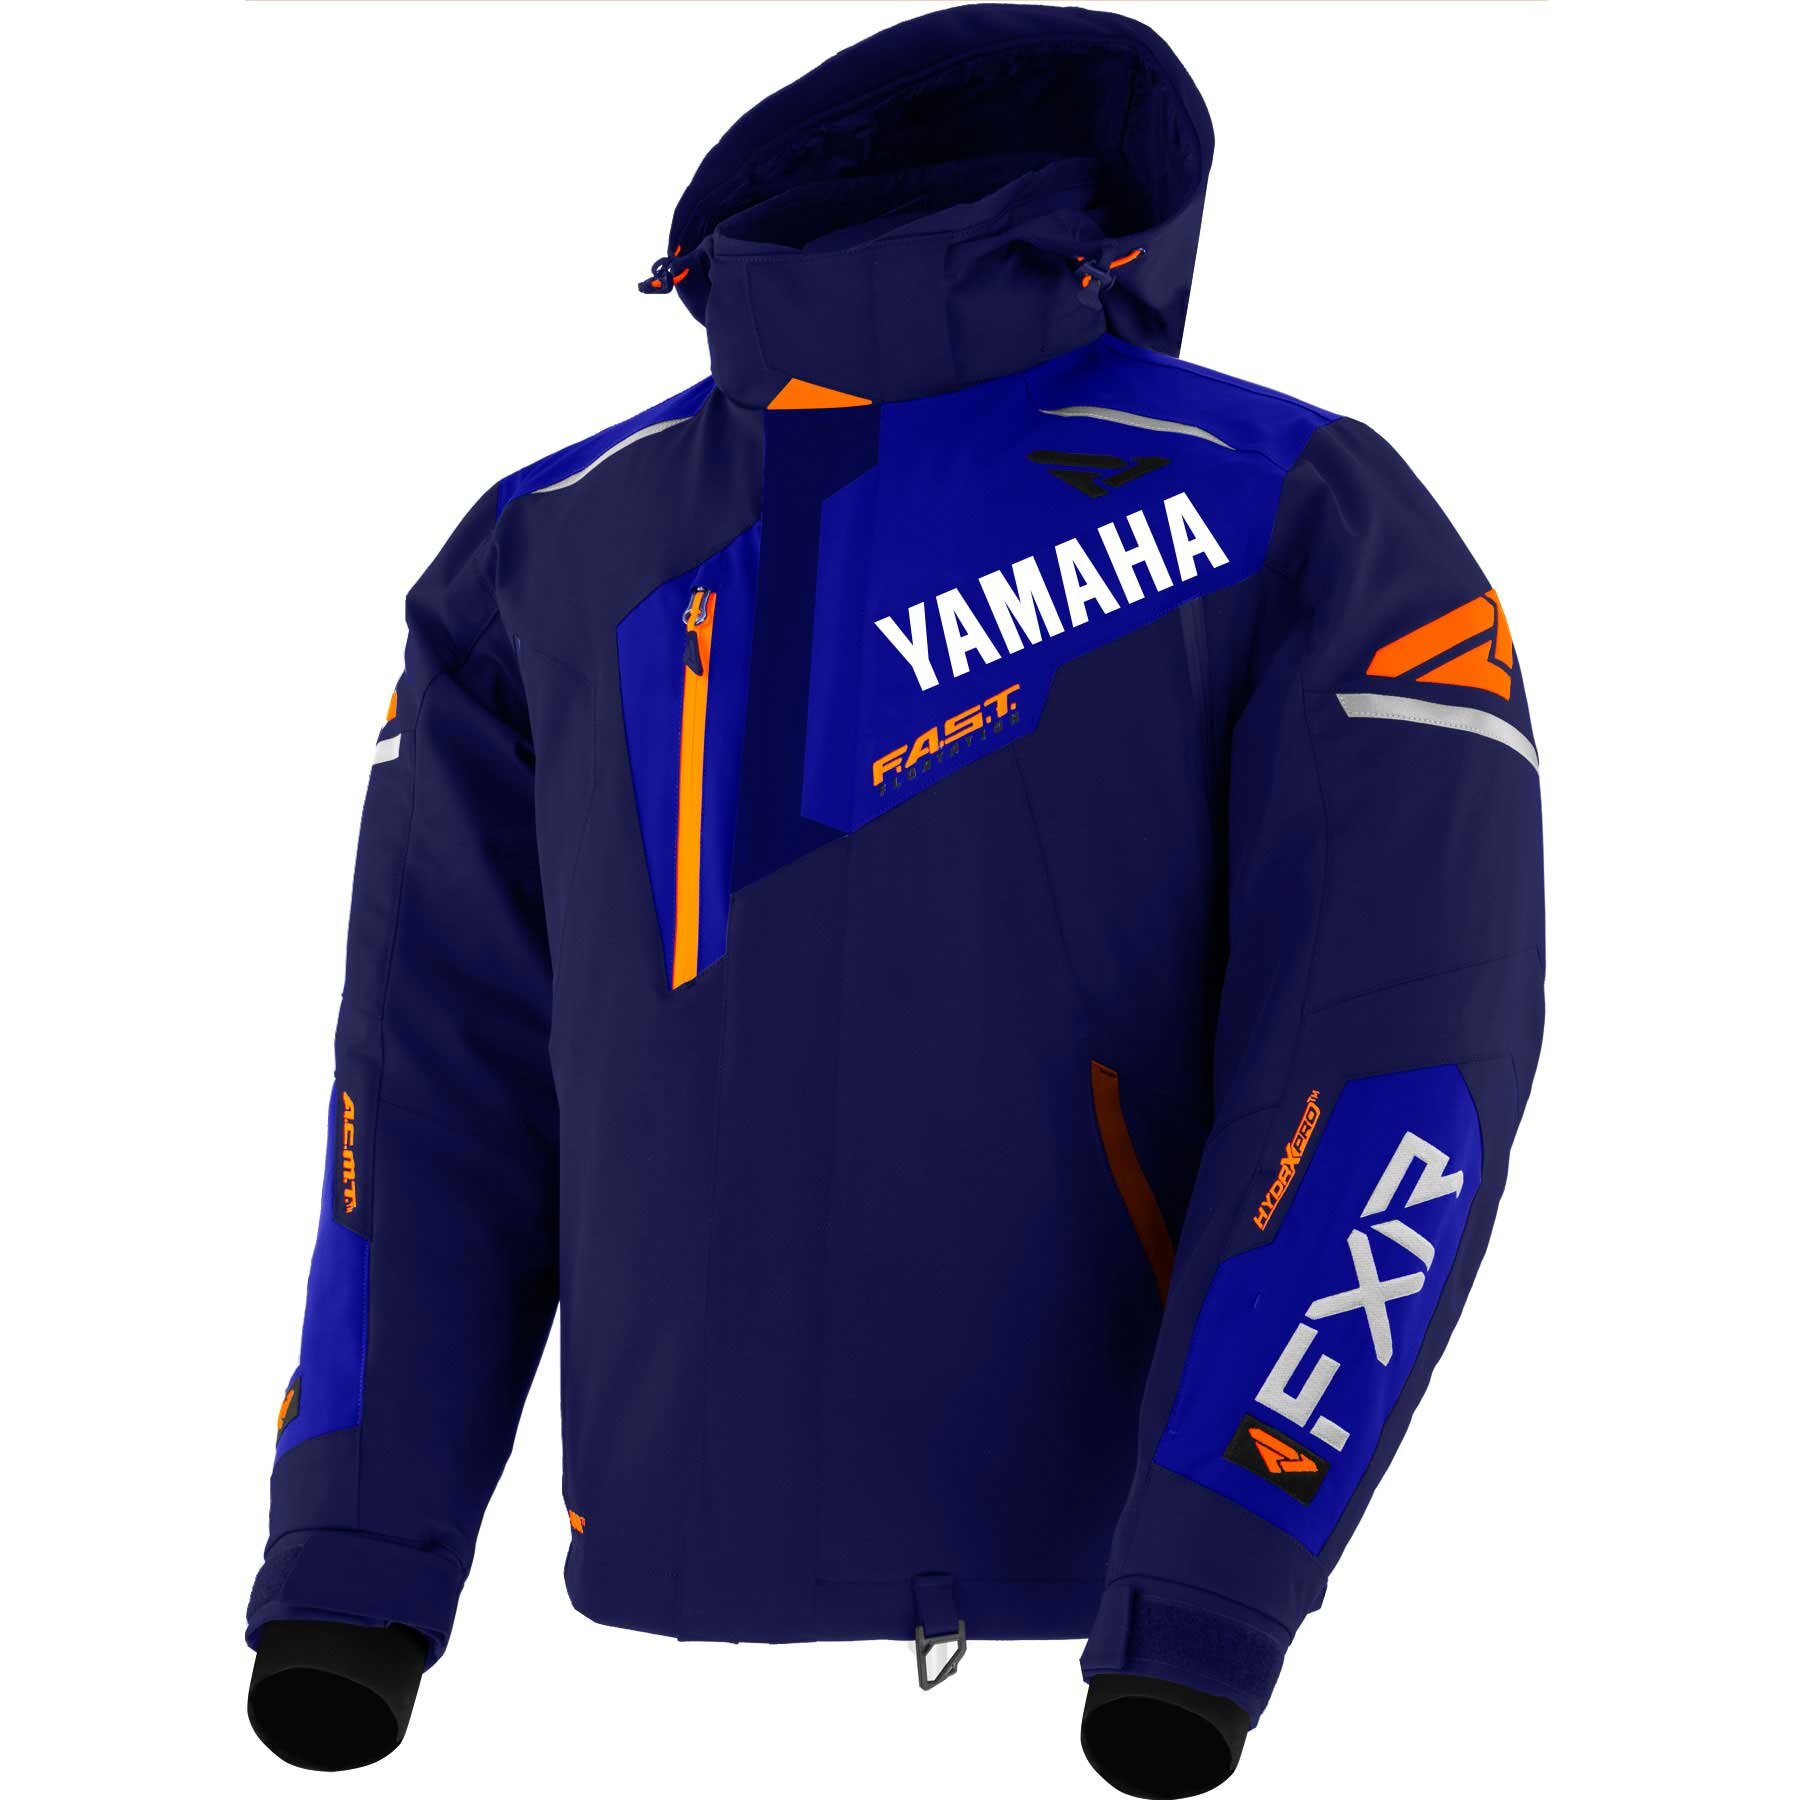 Yamaha Renegade FX Jacket by FXR® Extra Small navy/blue/orange